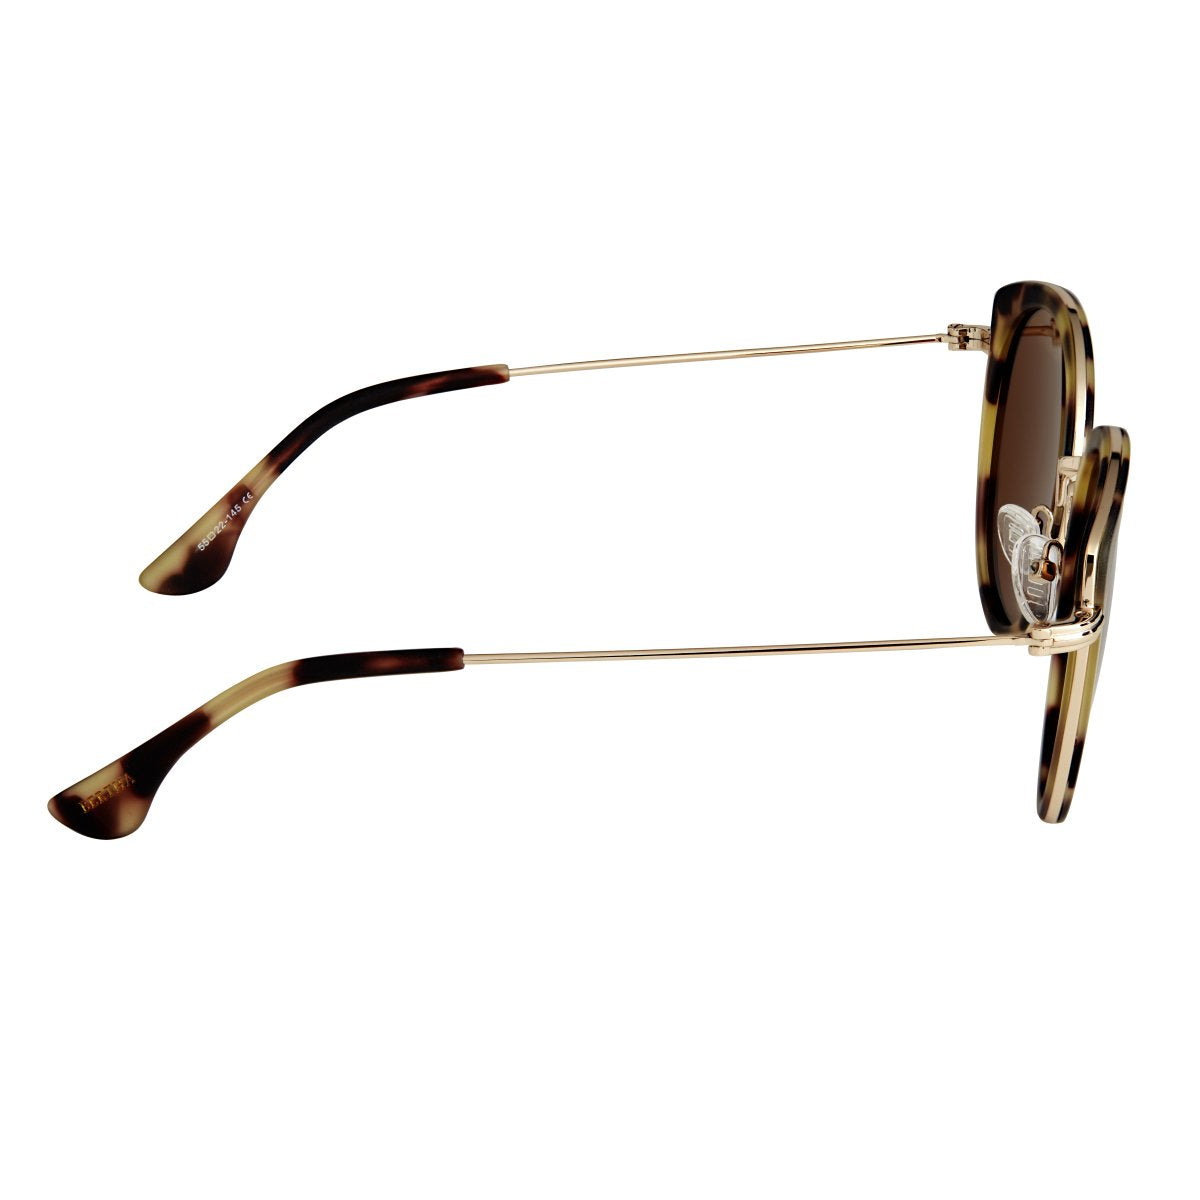 Bertha Reese Polarized Sunglasses - Tortoise/Brown - BRSBR044BK